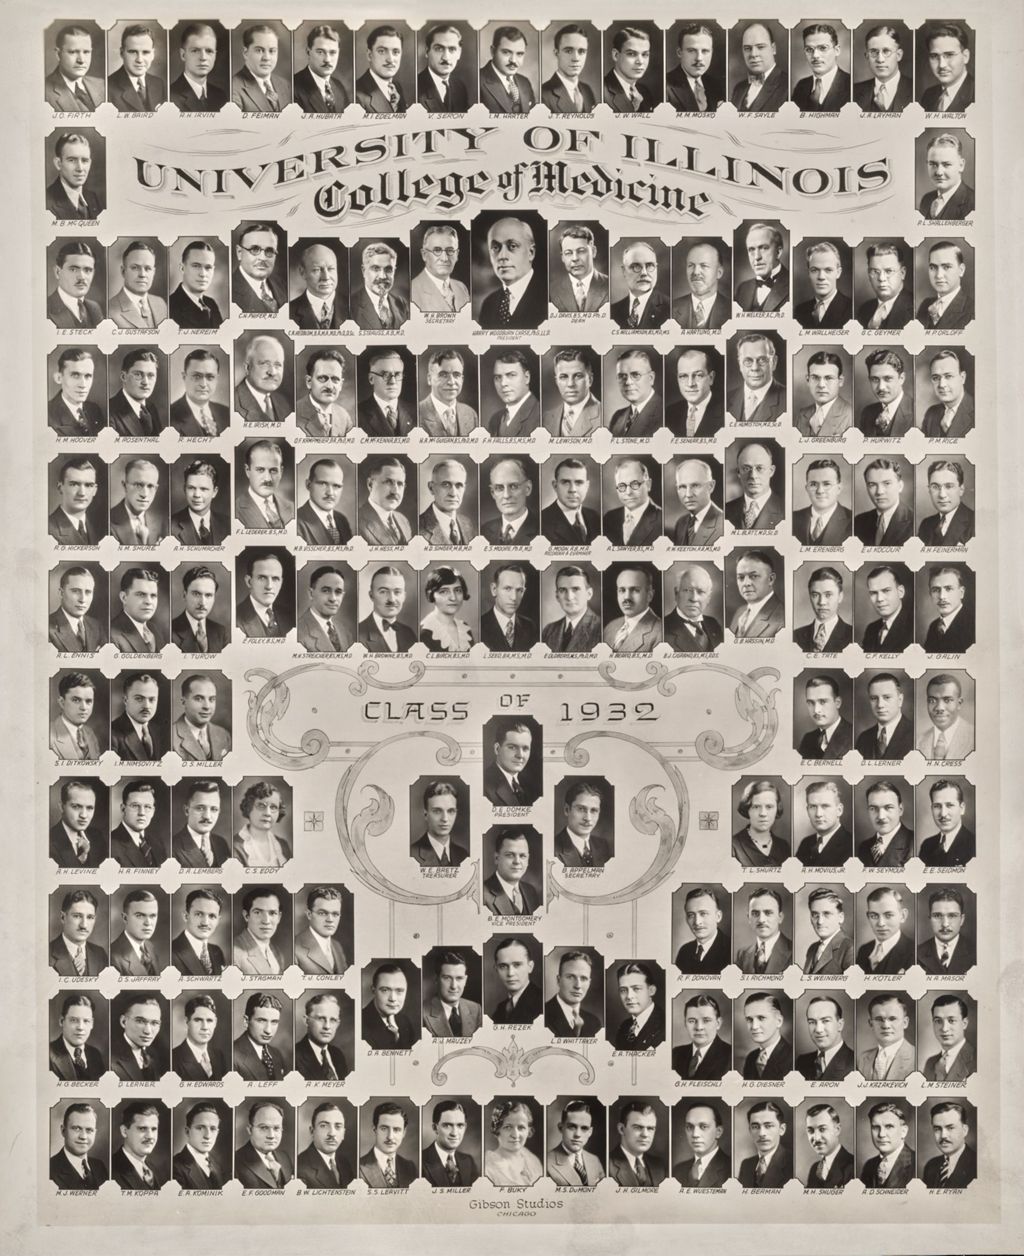 Miniature of 1932 graduating class, University of Illinois College of Medicine